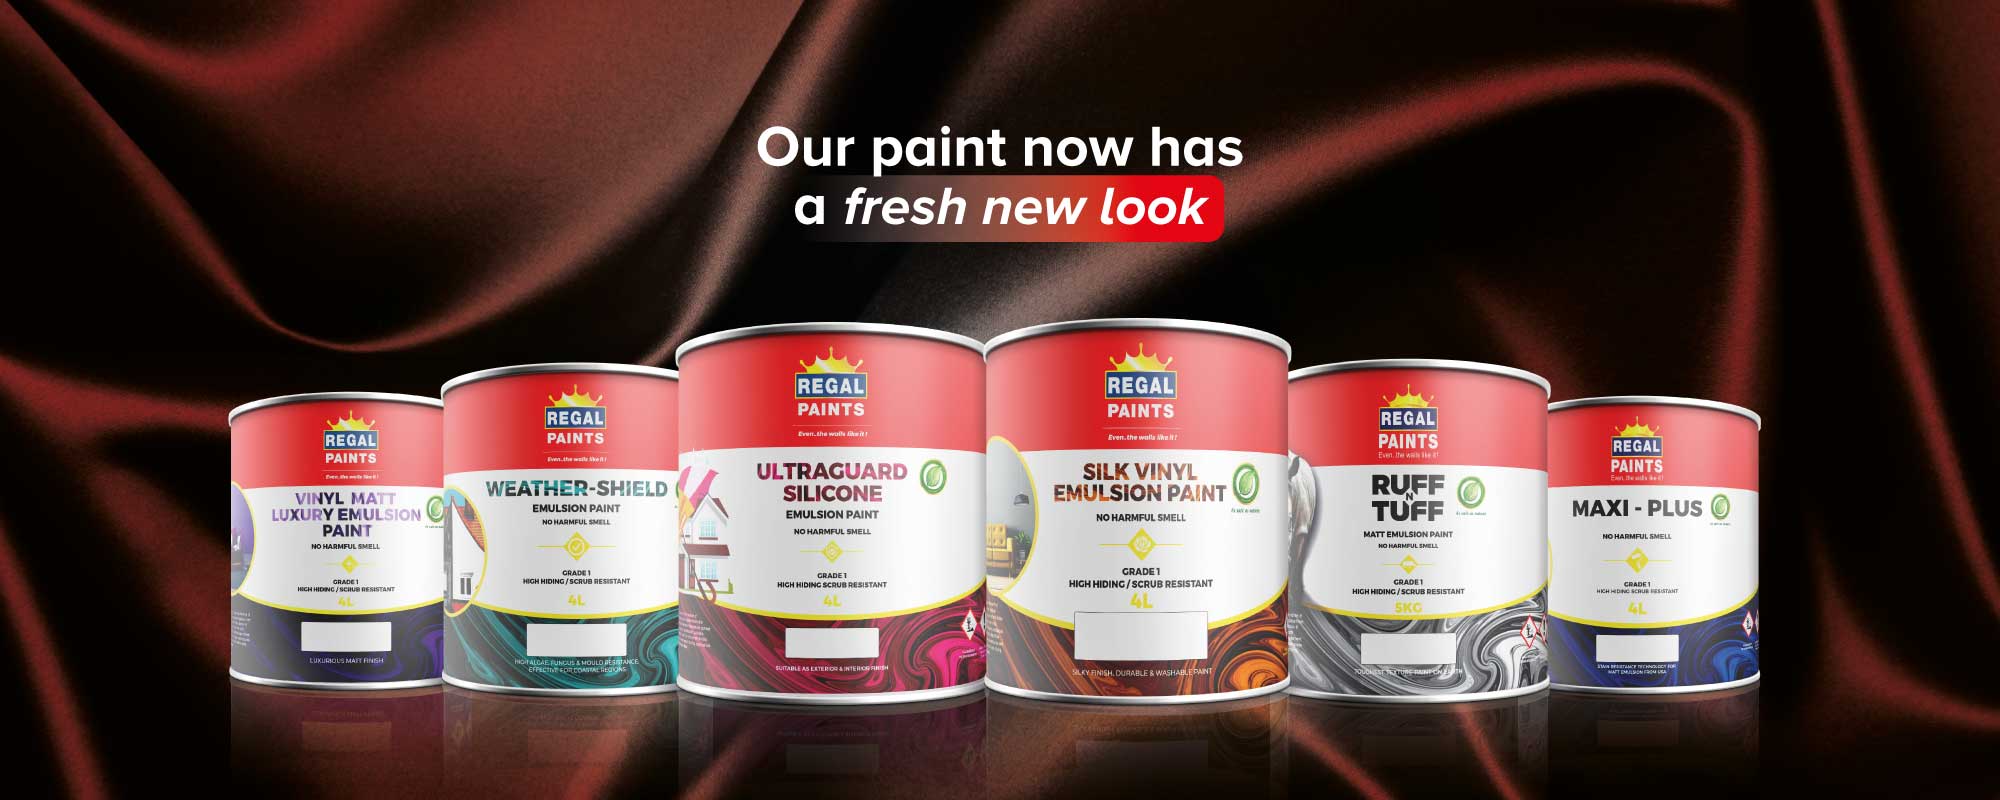 Regal Premium paints